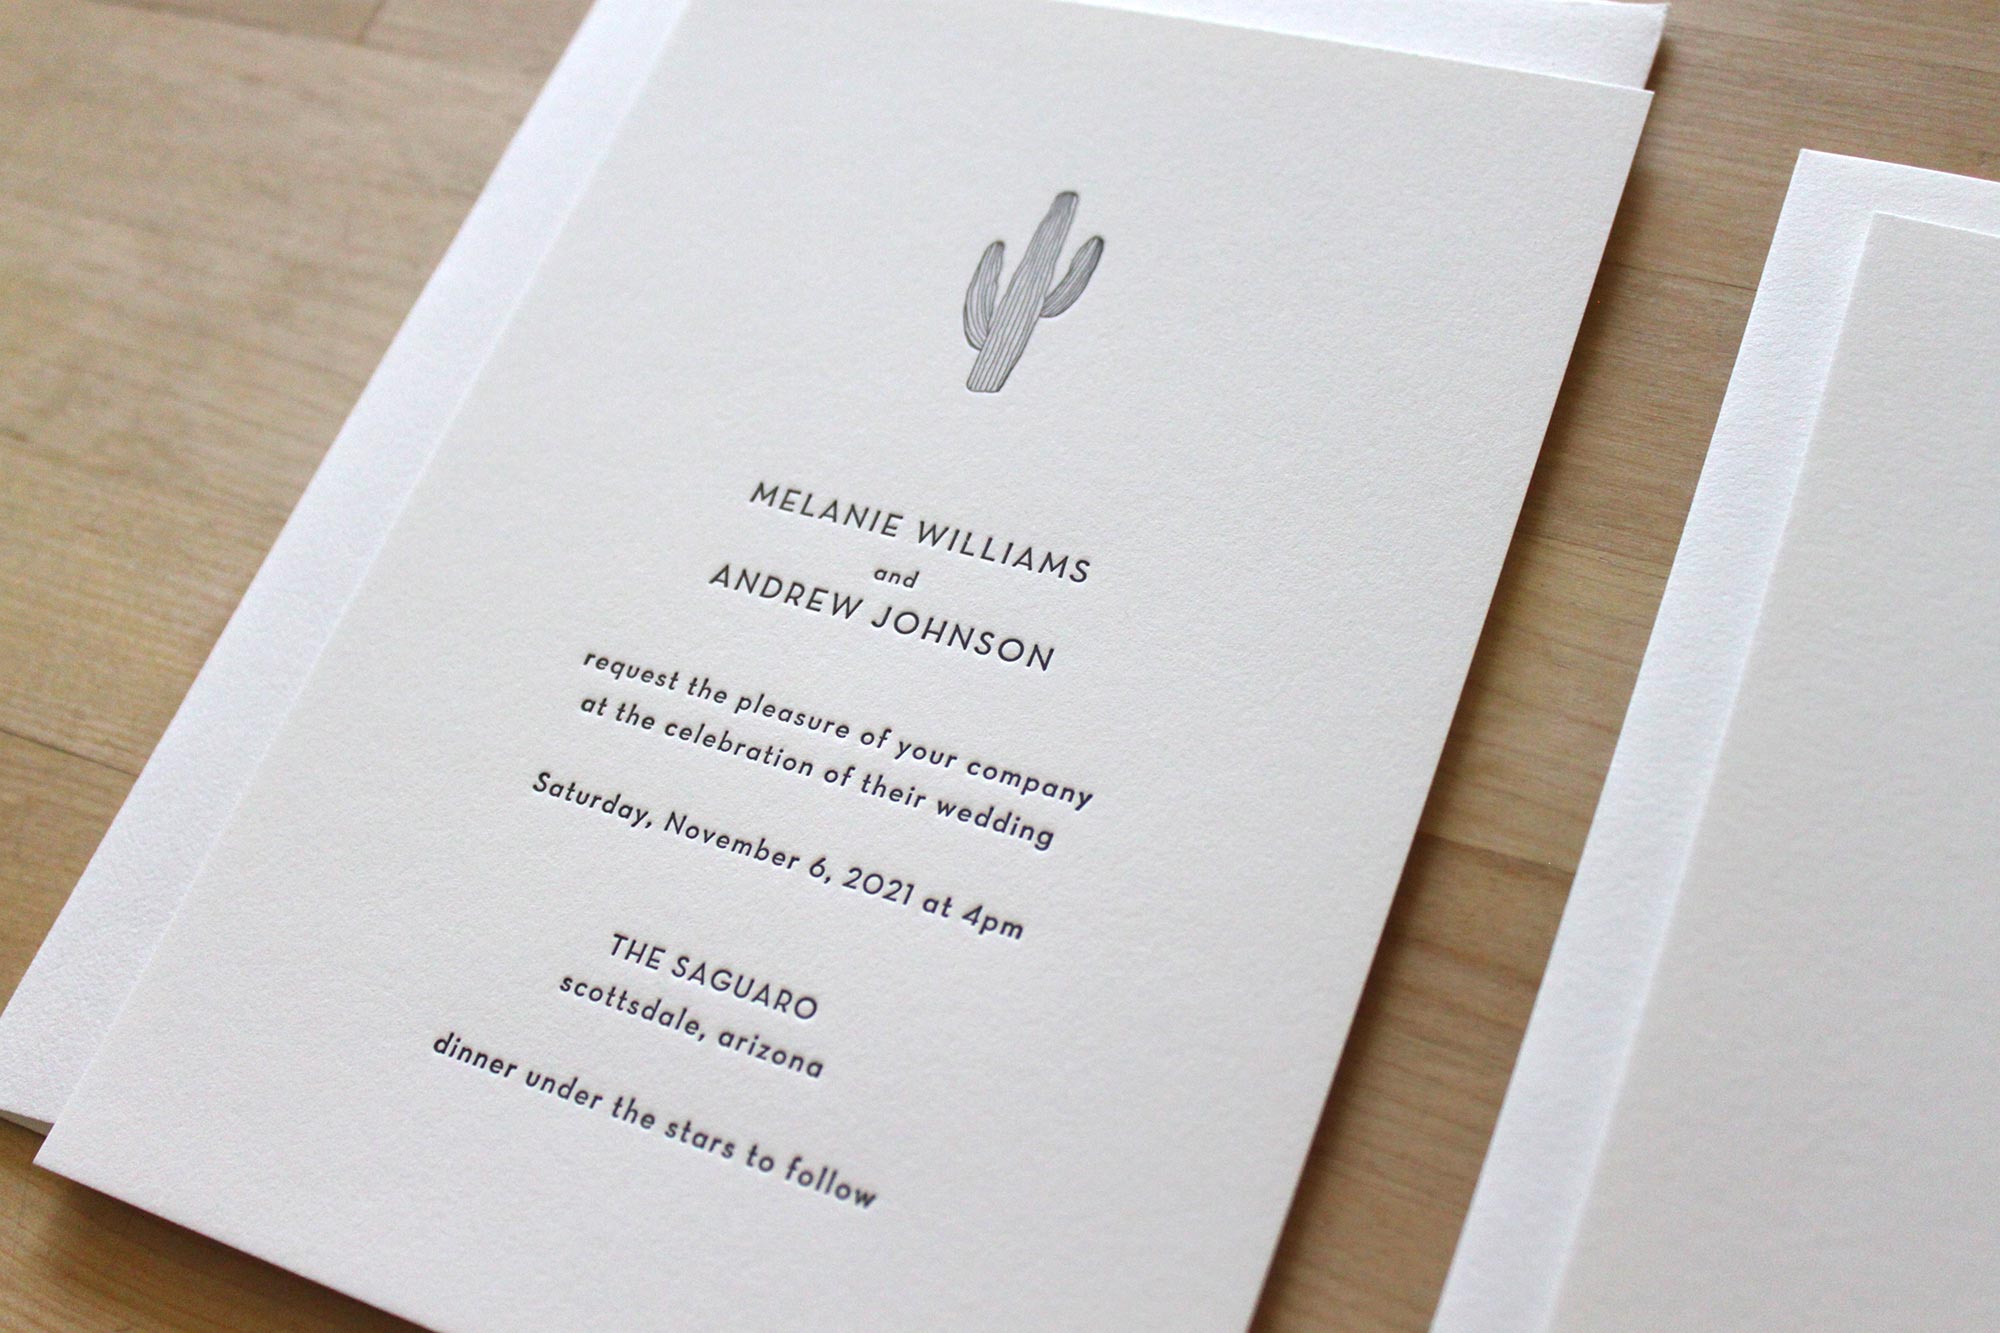 Saguaro-2-letterpress-wedding-invitations.jpg